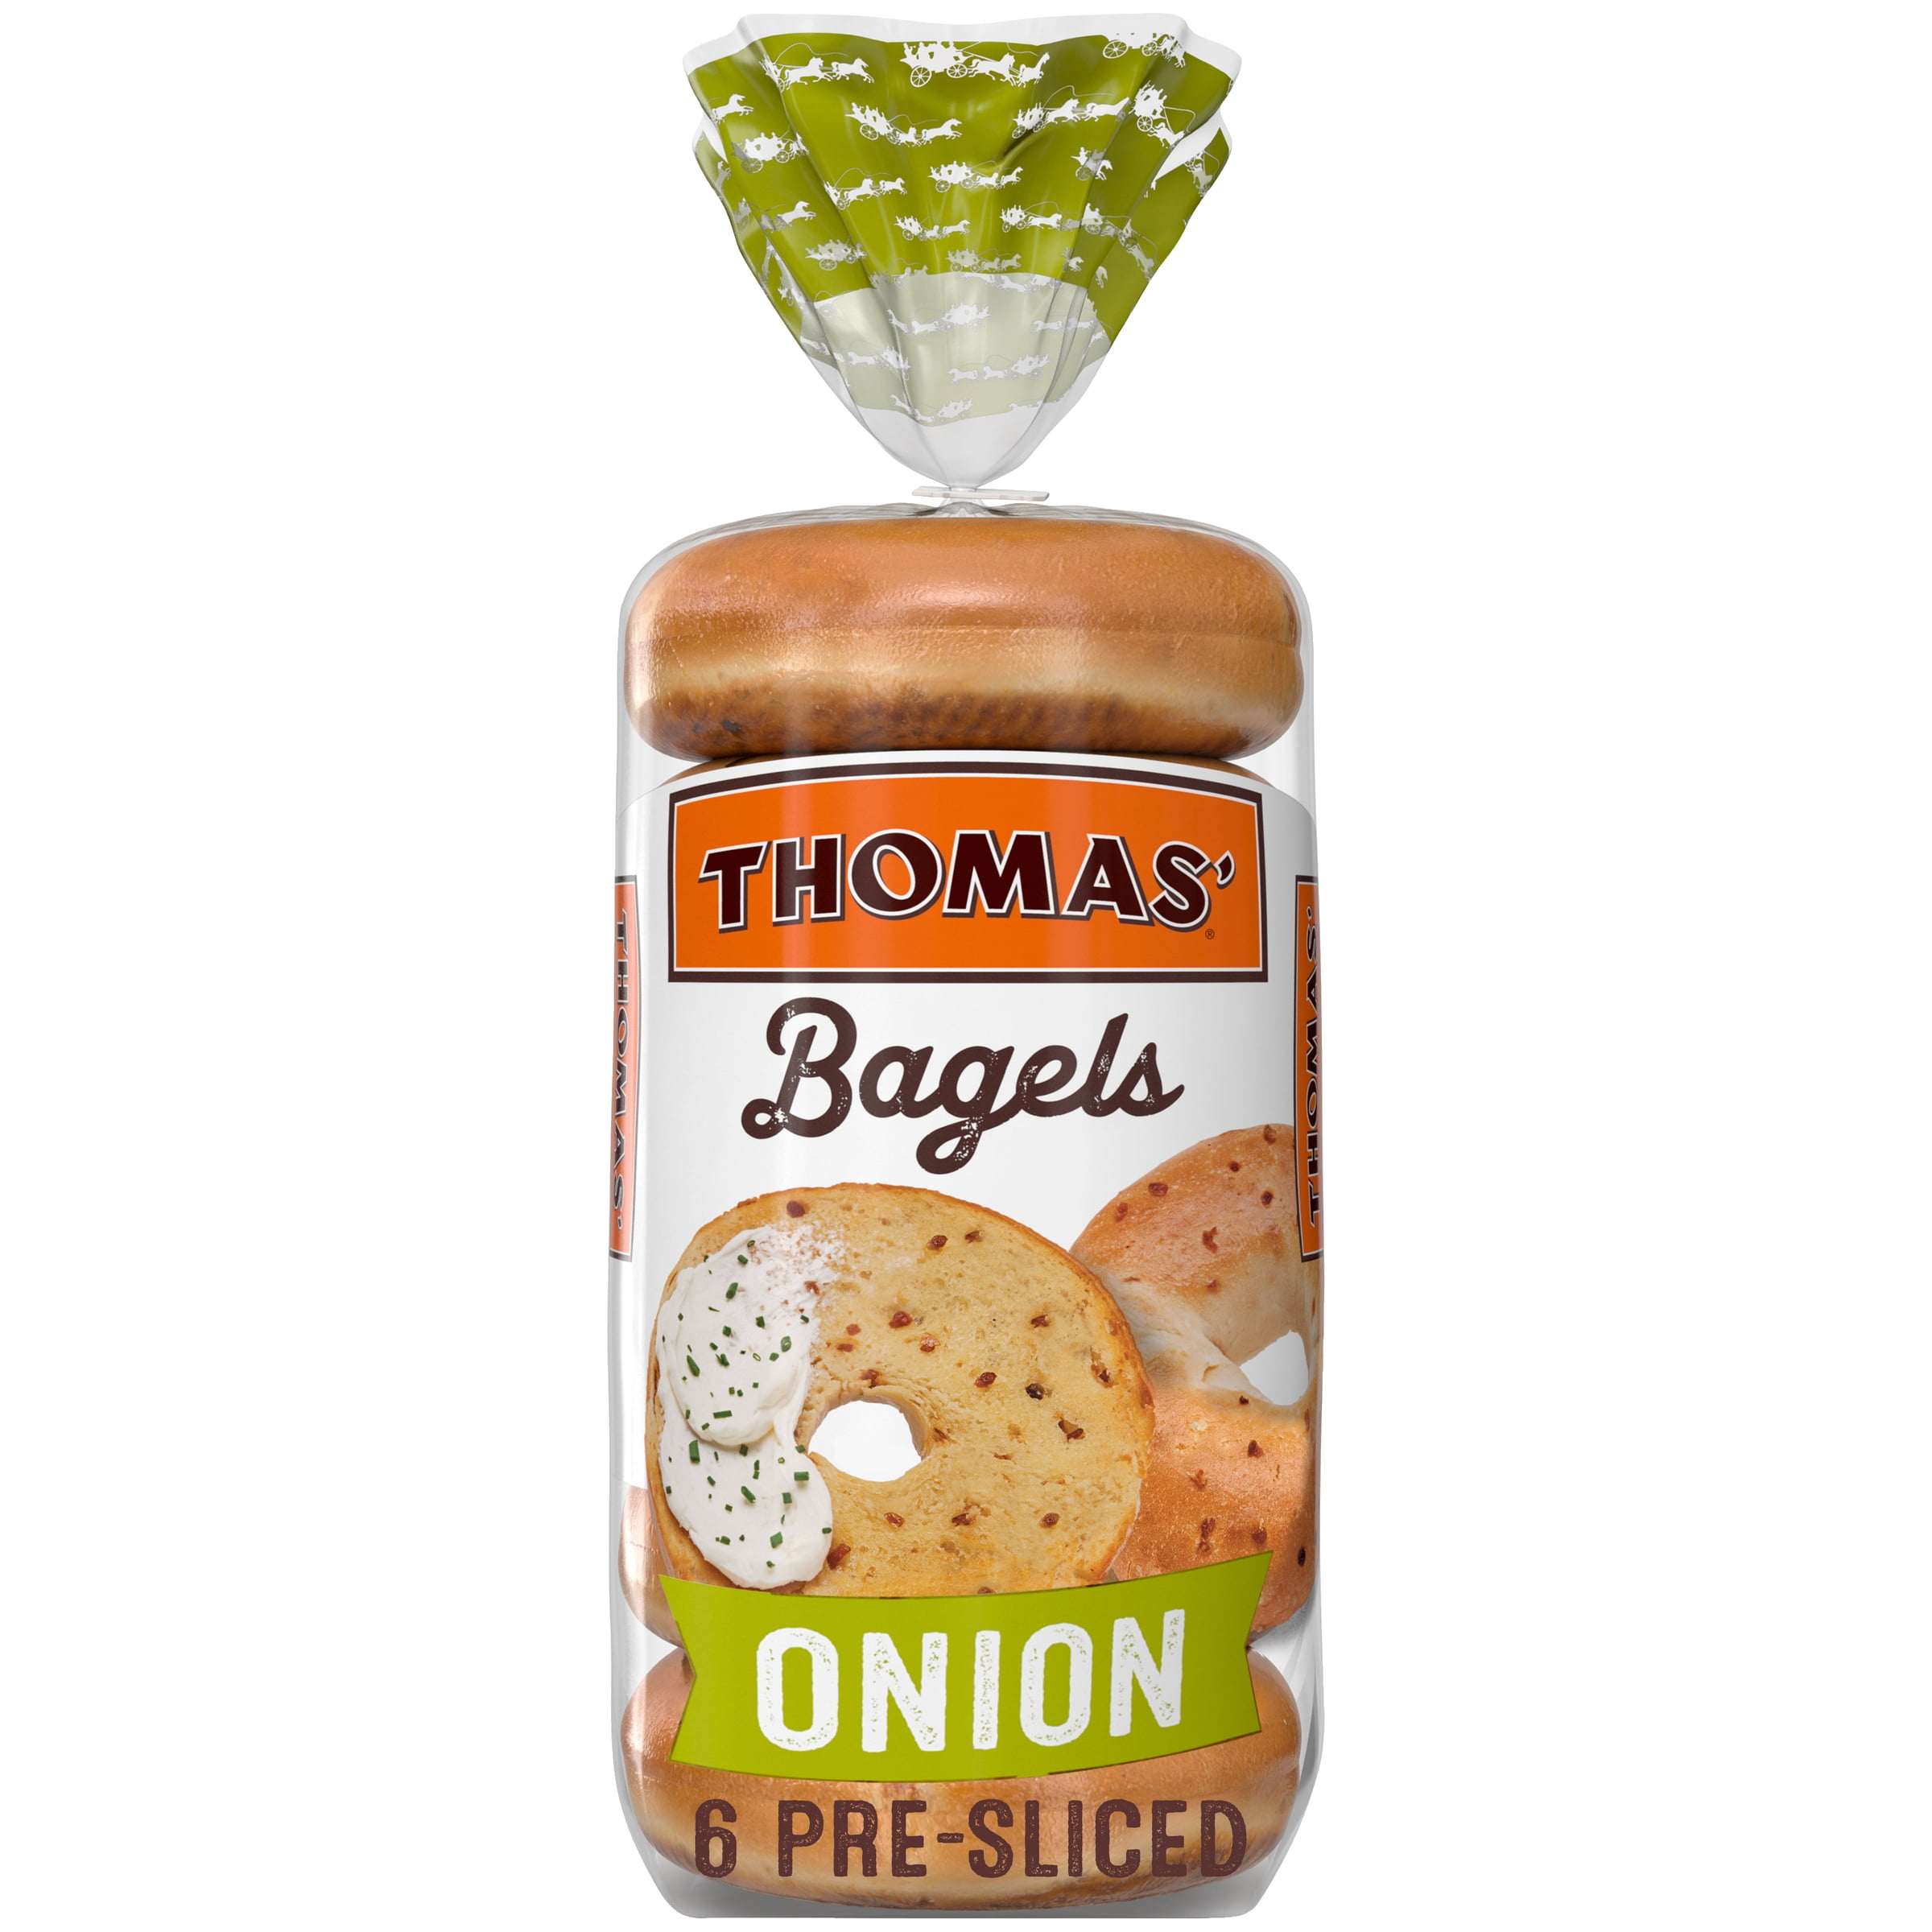 Thomas Onion Bagels, 6 Pre-Sliced Bagels, 20 Oz